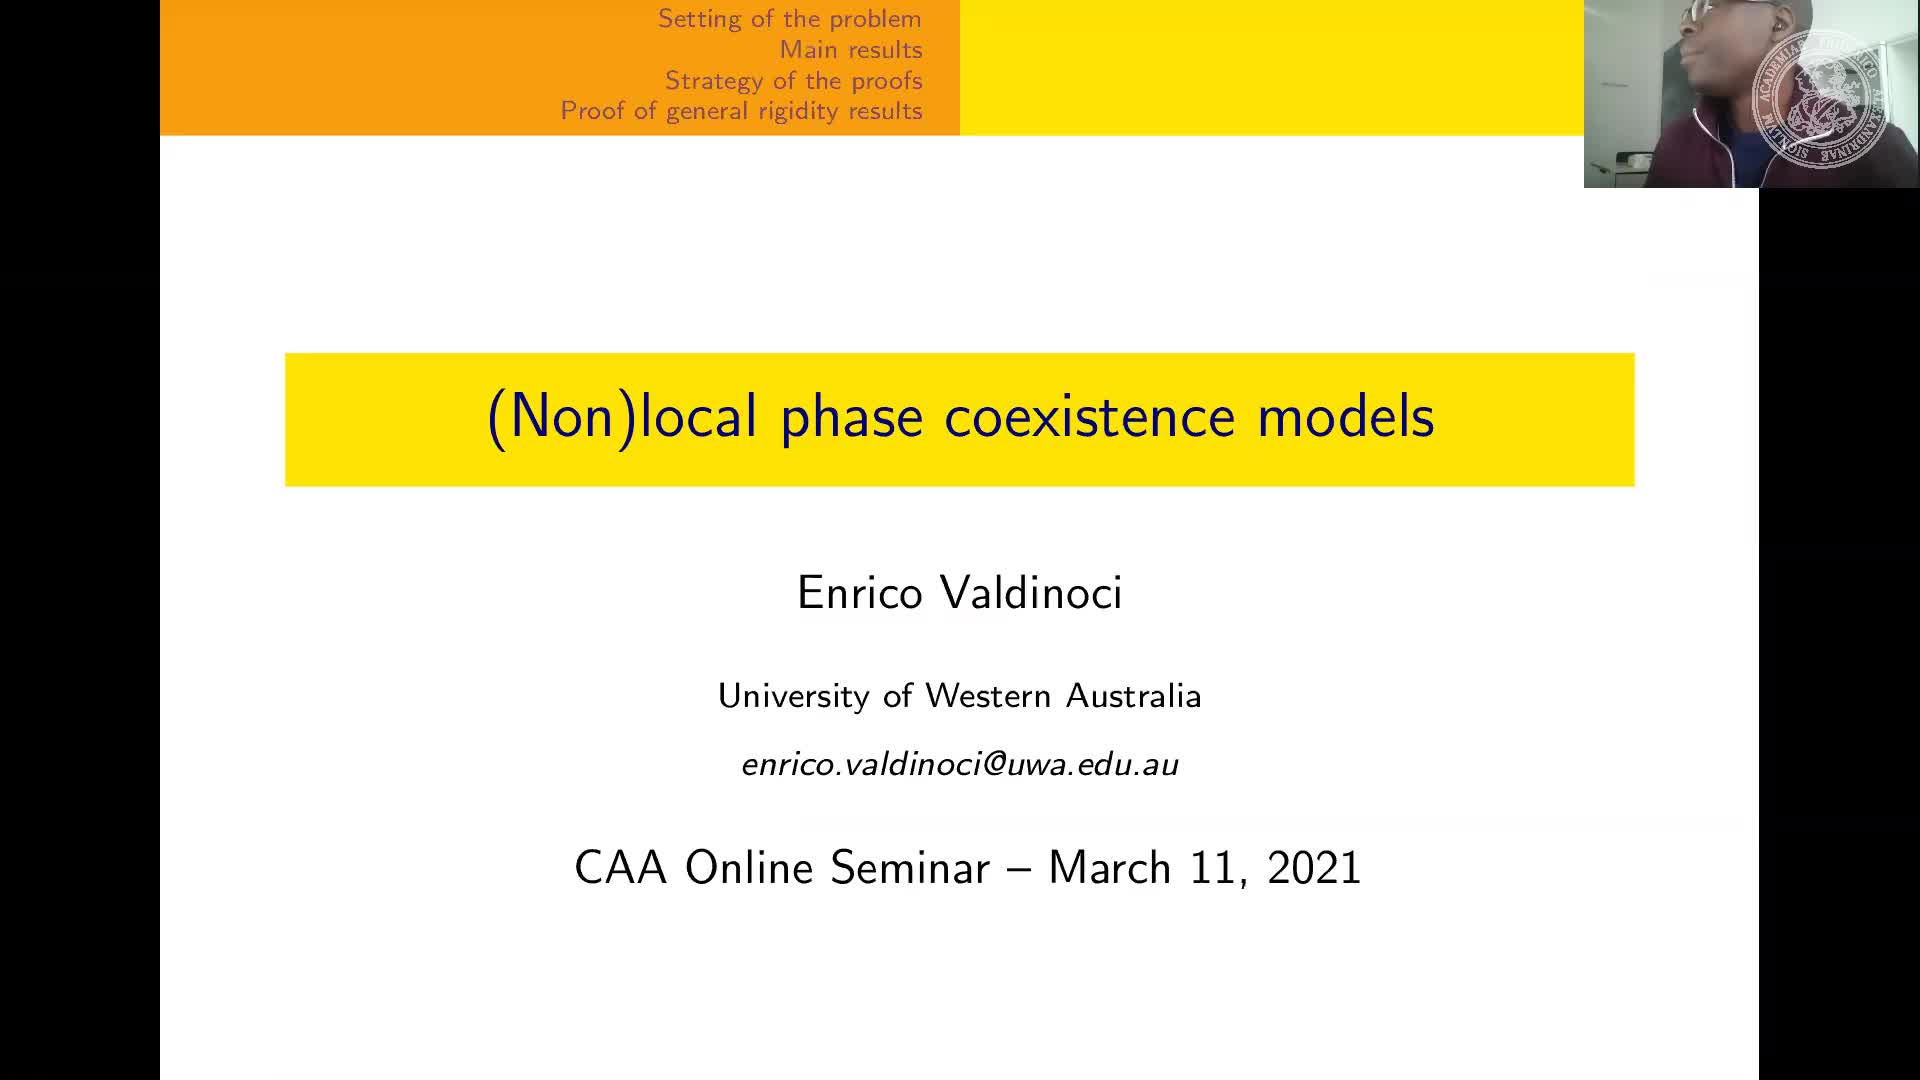 (Non)local phase coexistence models (E. Valdinoci, The University of Western Australia, Australia) preview image